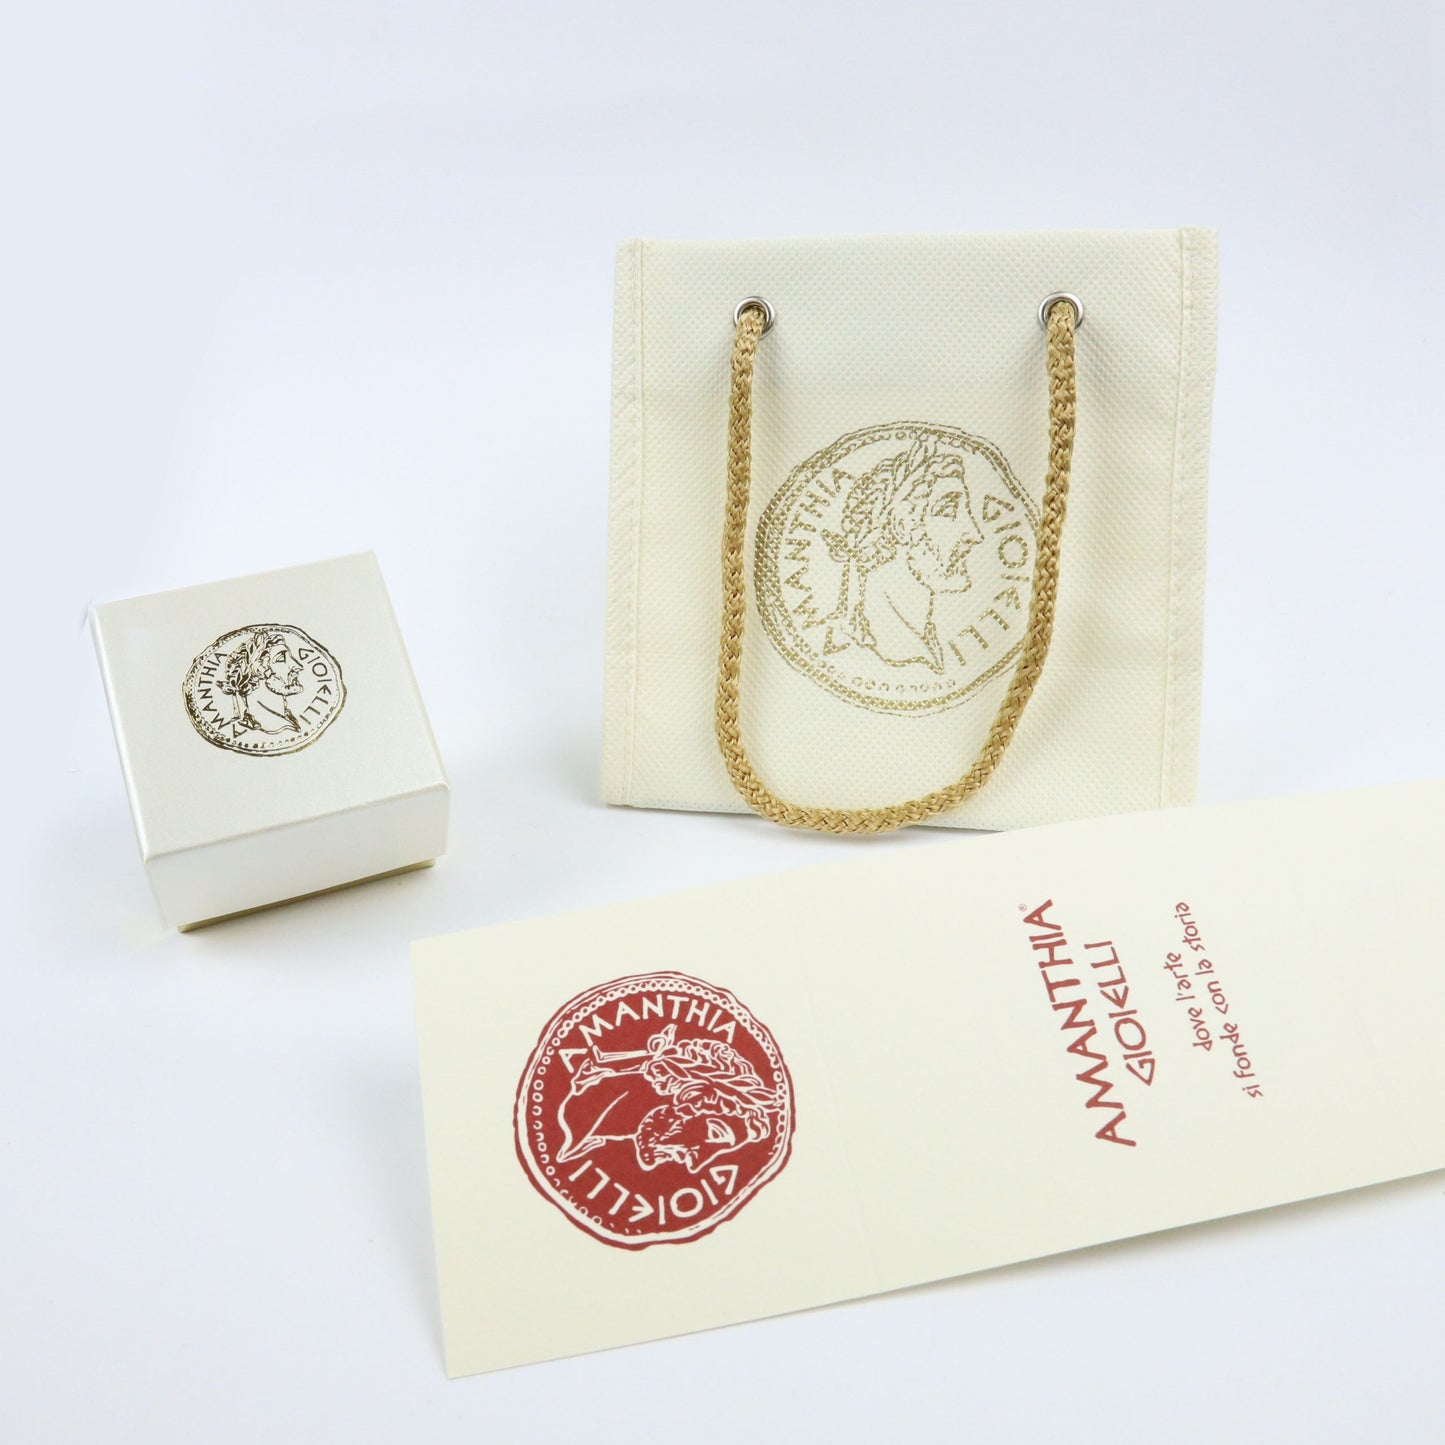 Bracciale Argento maglia bizantina con moneta San Francesco di Paola - BR.SF.001  Amanthia   